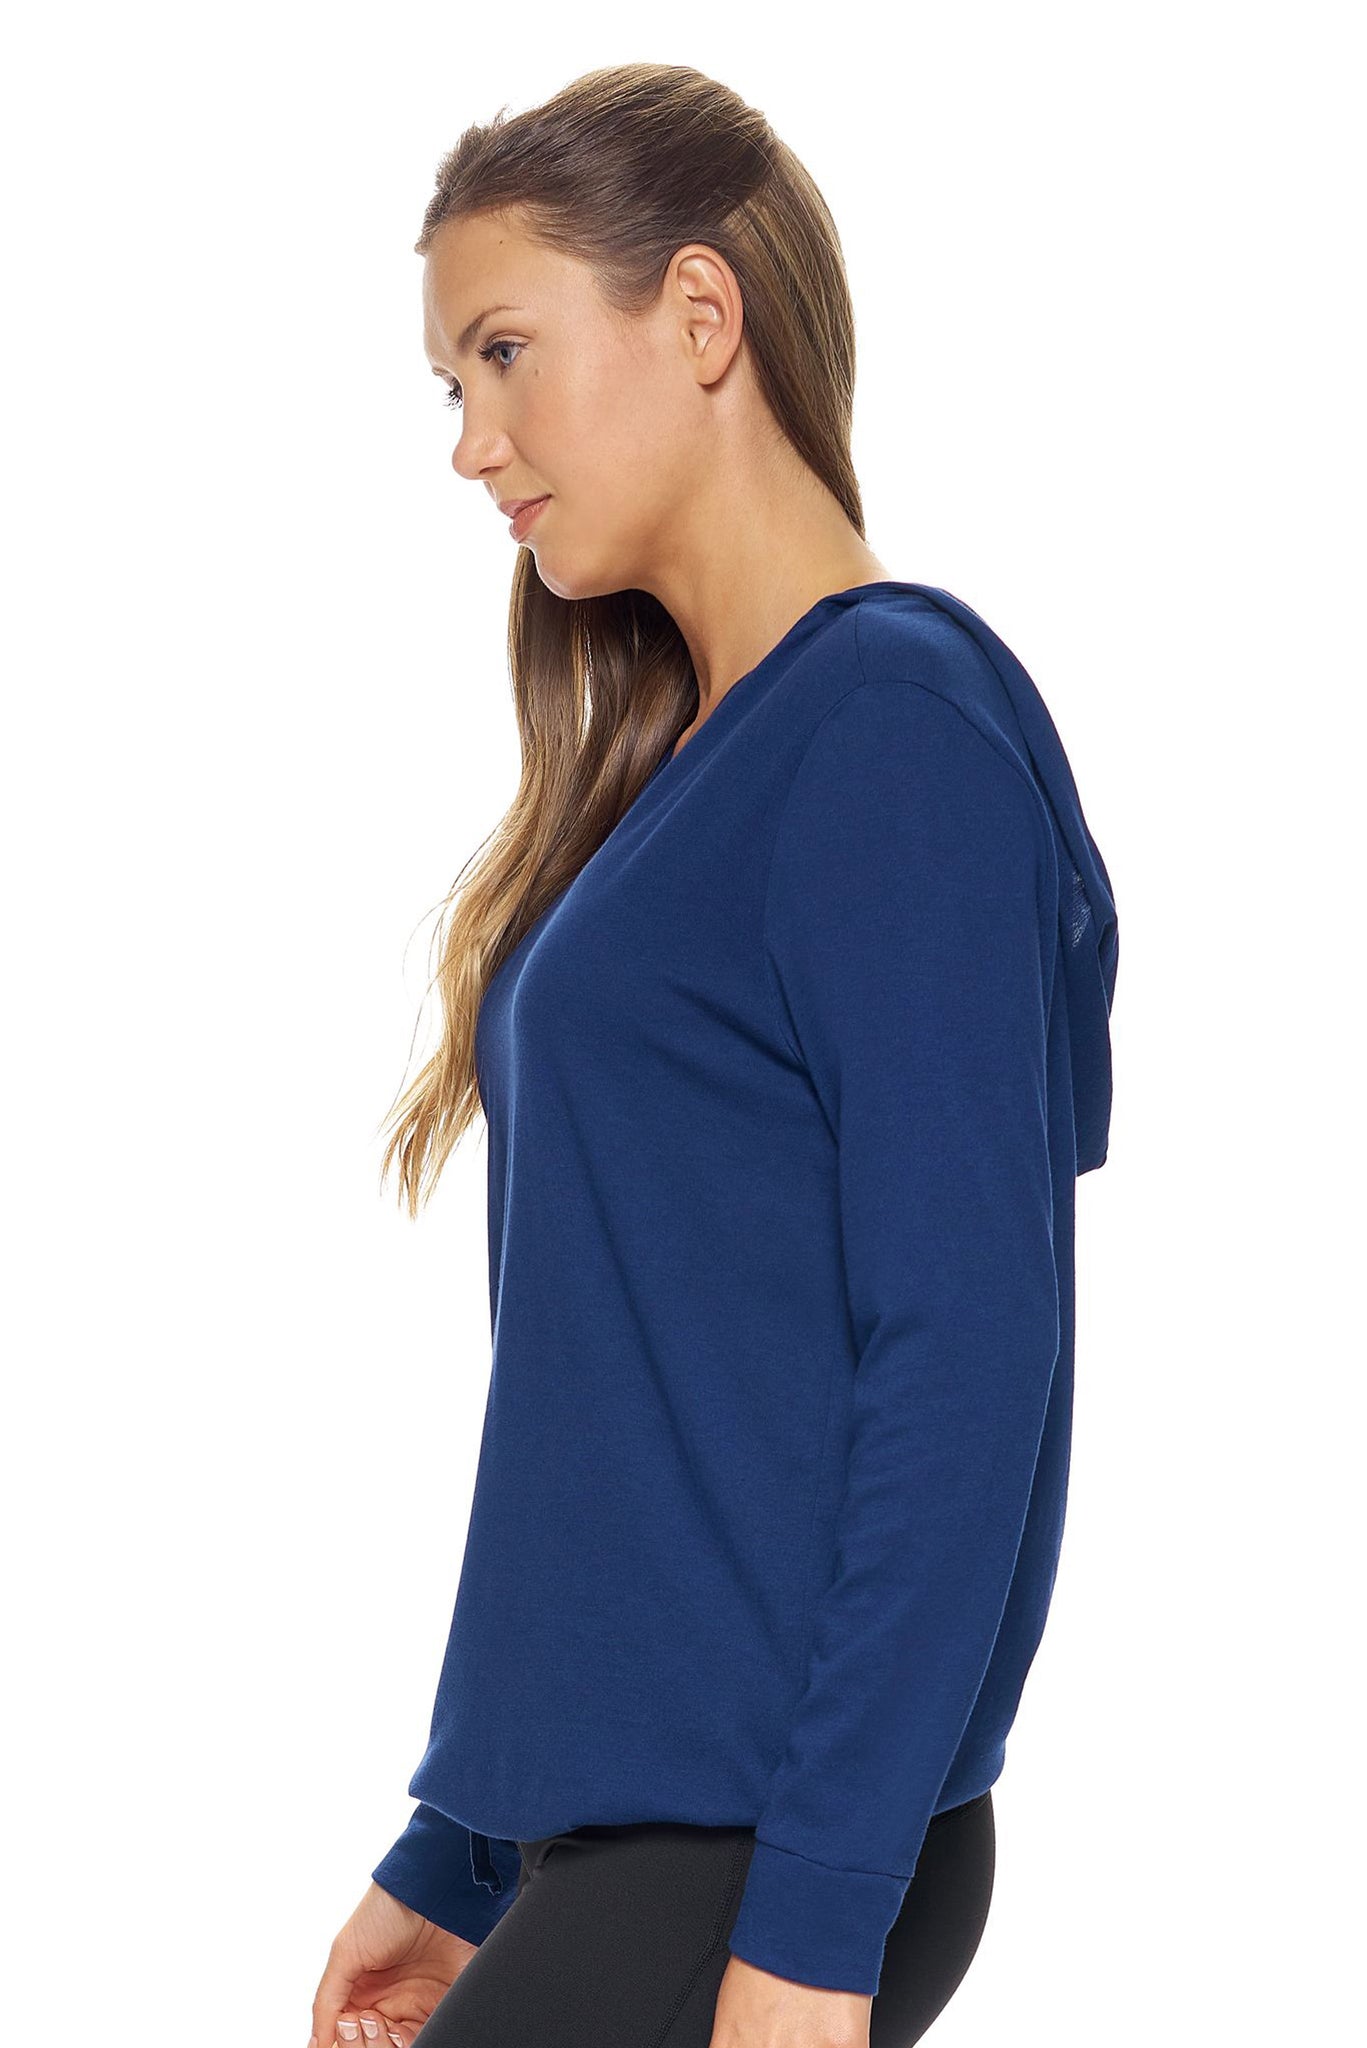 Expert Brand Wholesale Women's Hoodie Shirt V-Neck Lenzing Modal Made in USA in Navy Image 2#navy